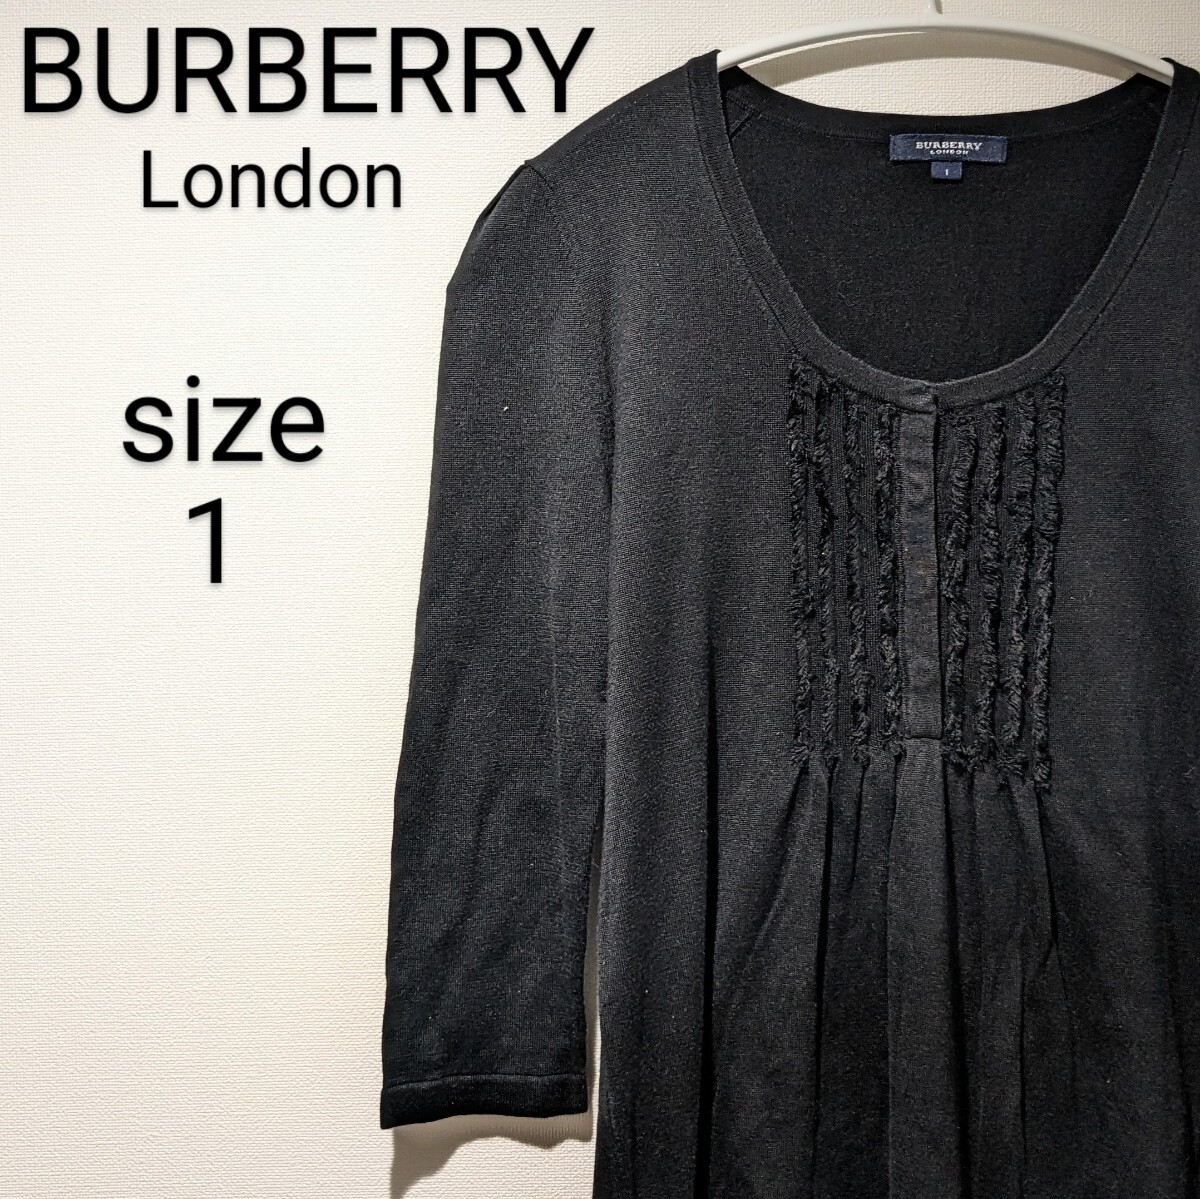 BURBERRY Burberry London tops silk 100% button hose Logo lady's woman clothes black silk long sleeve spring .XS size corresponding 